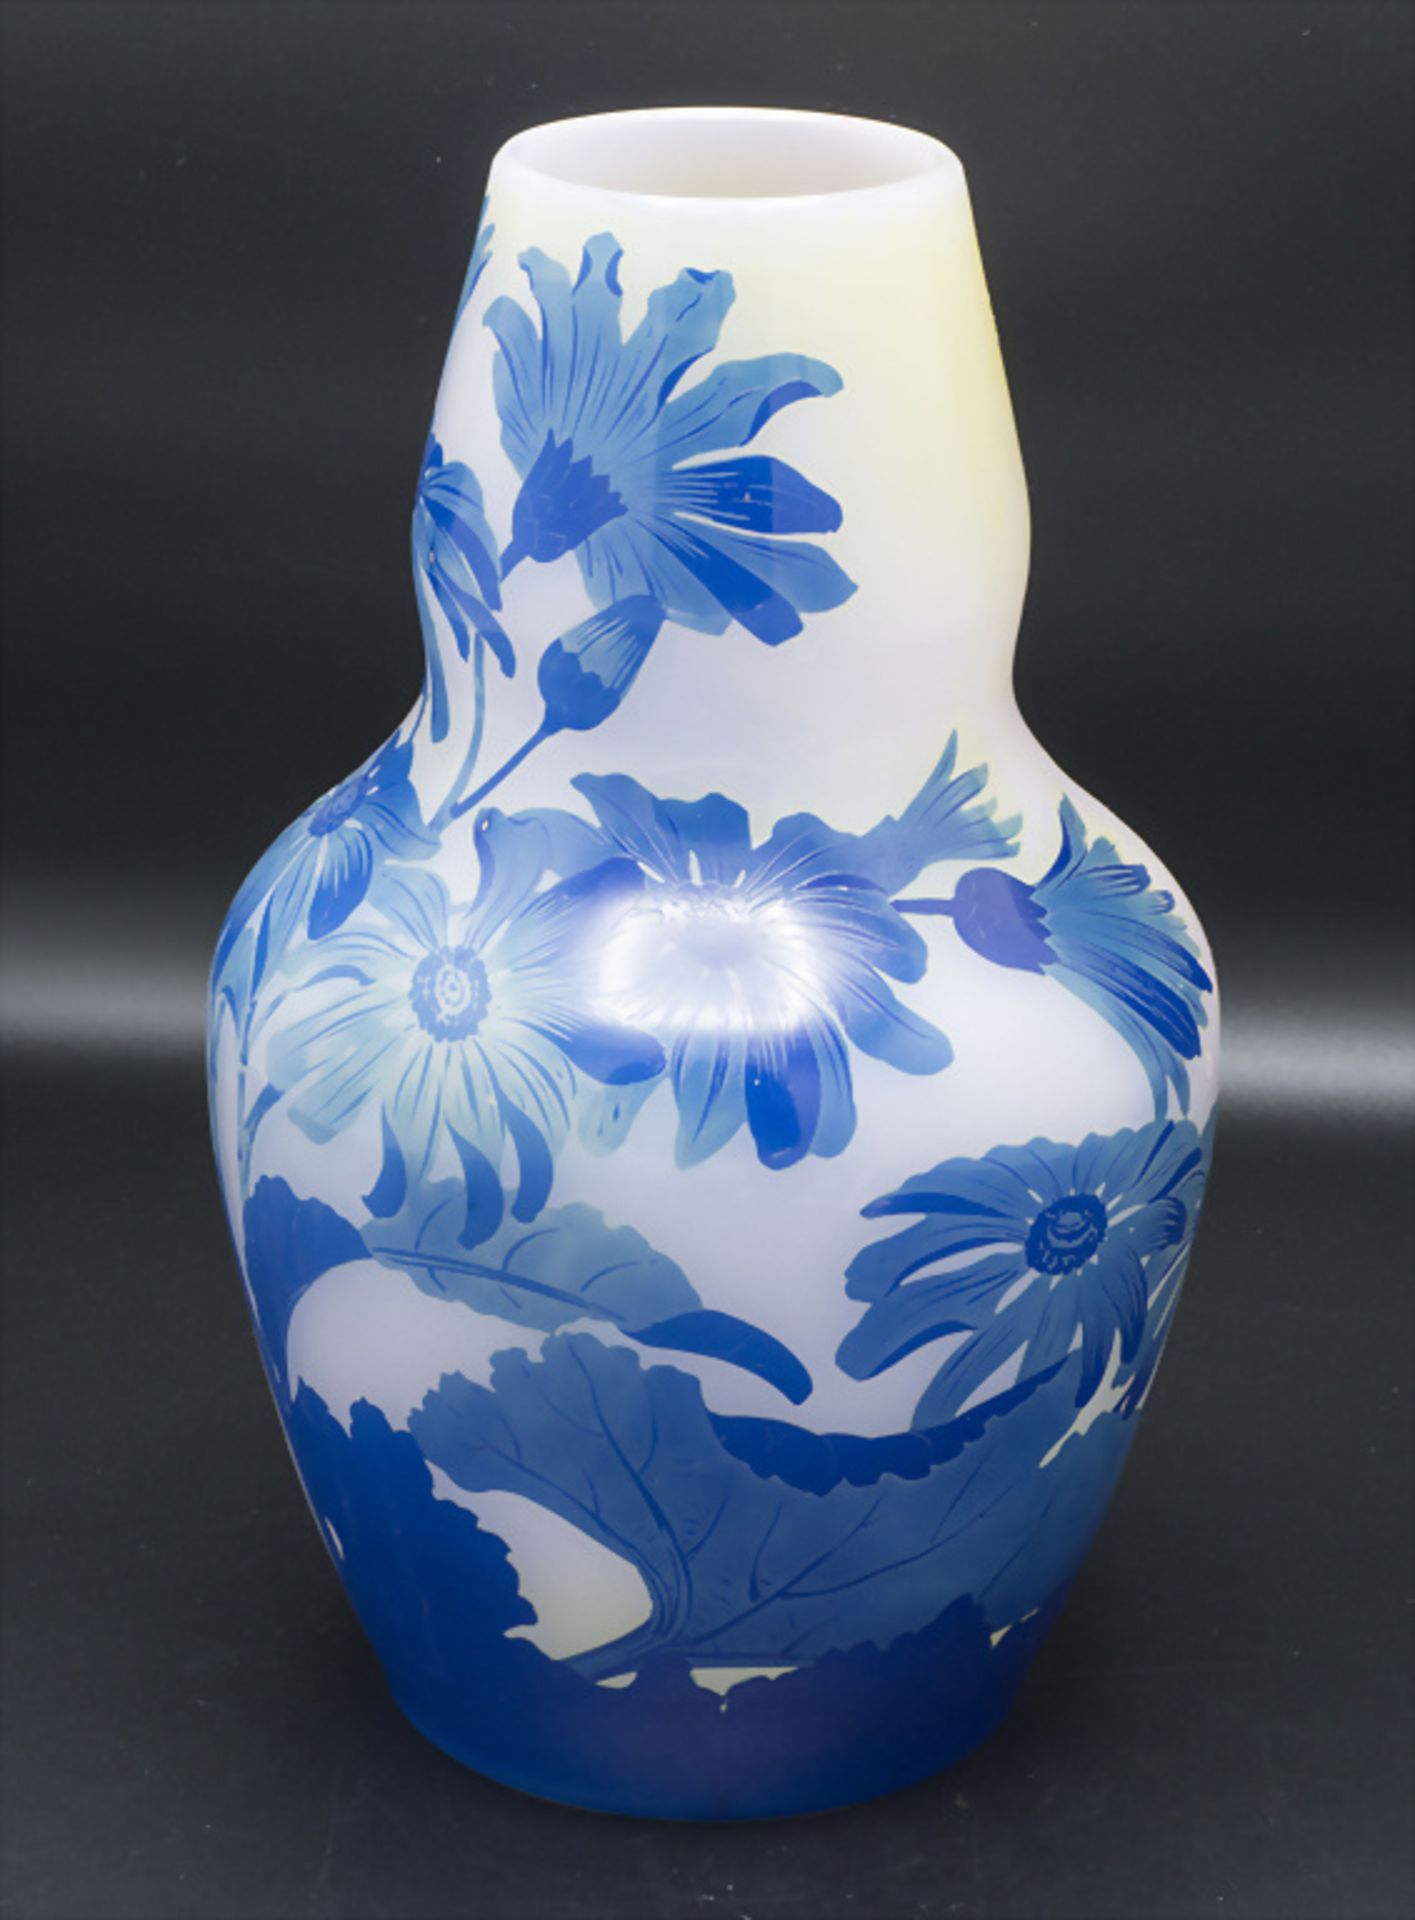 Jugendstil Kürbis-Vase mit Sonnenblumen / An Art Nouveau cameo glass vase with sunflowers, ... - Bild 2 aus 7